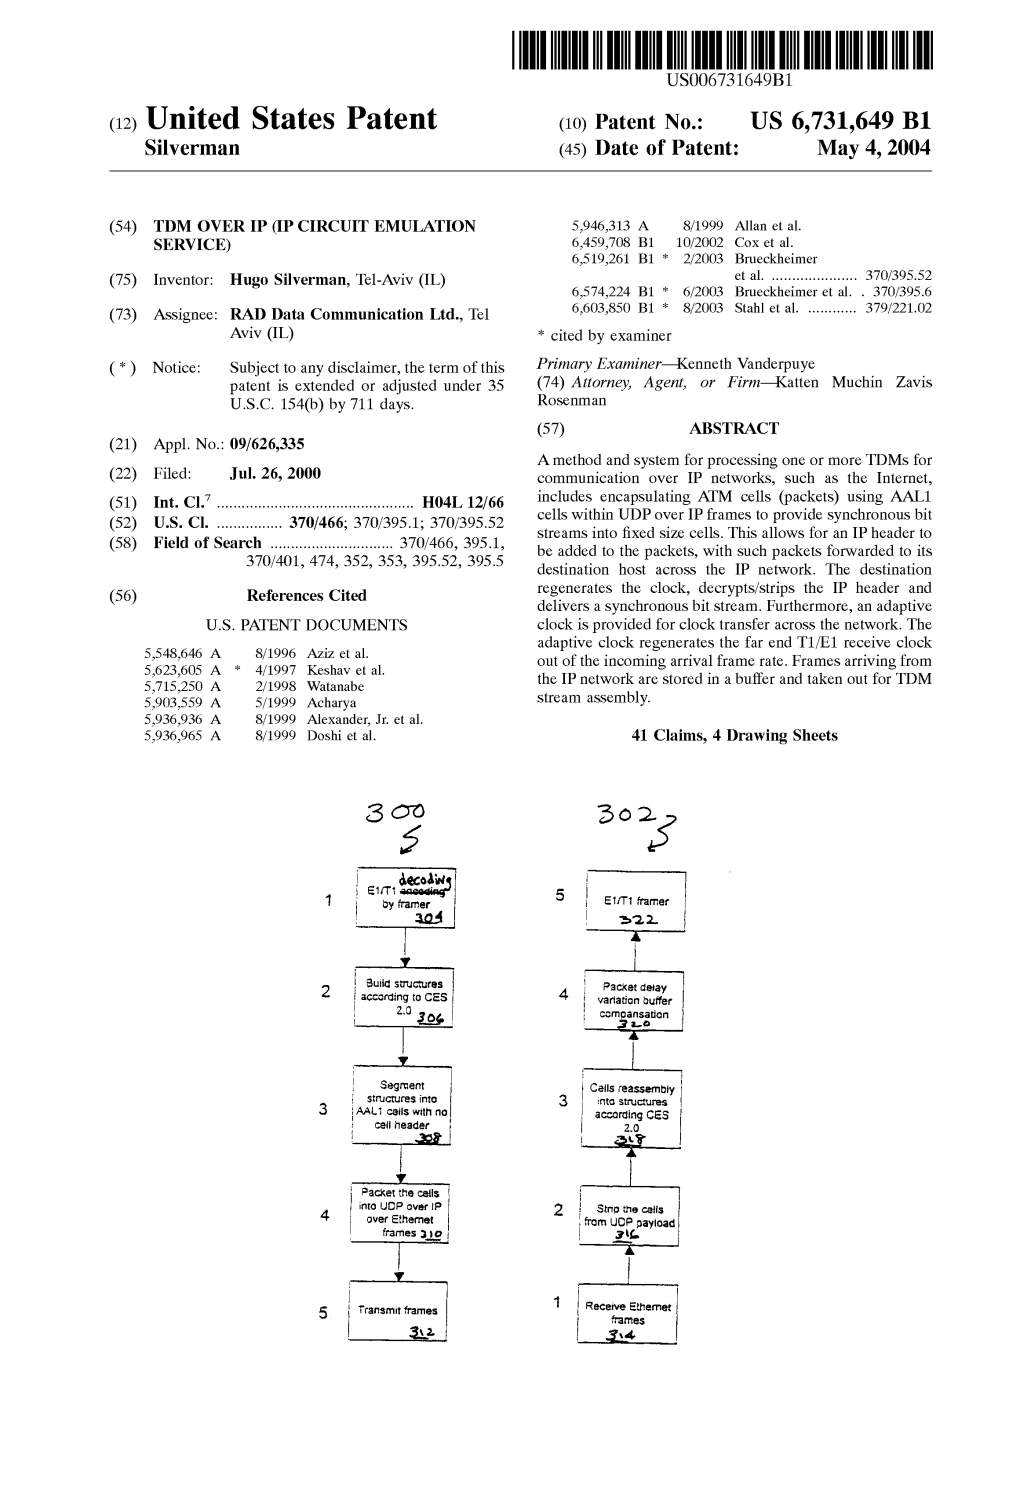 (12) United States Patent (10) Patent No.: US 6,731,649 B1 Silverman (45) Date of Patent: May 4, 2004